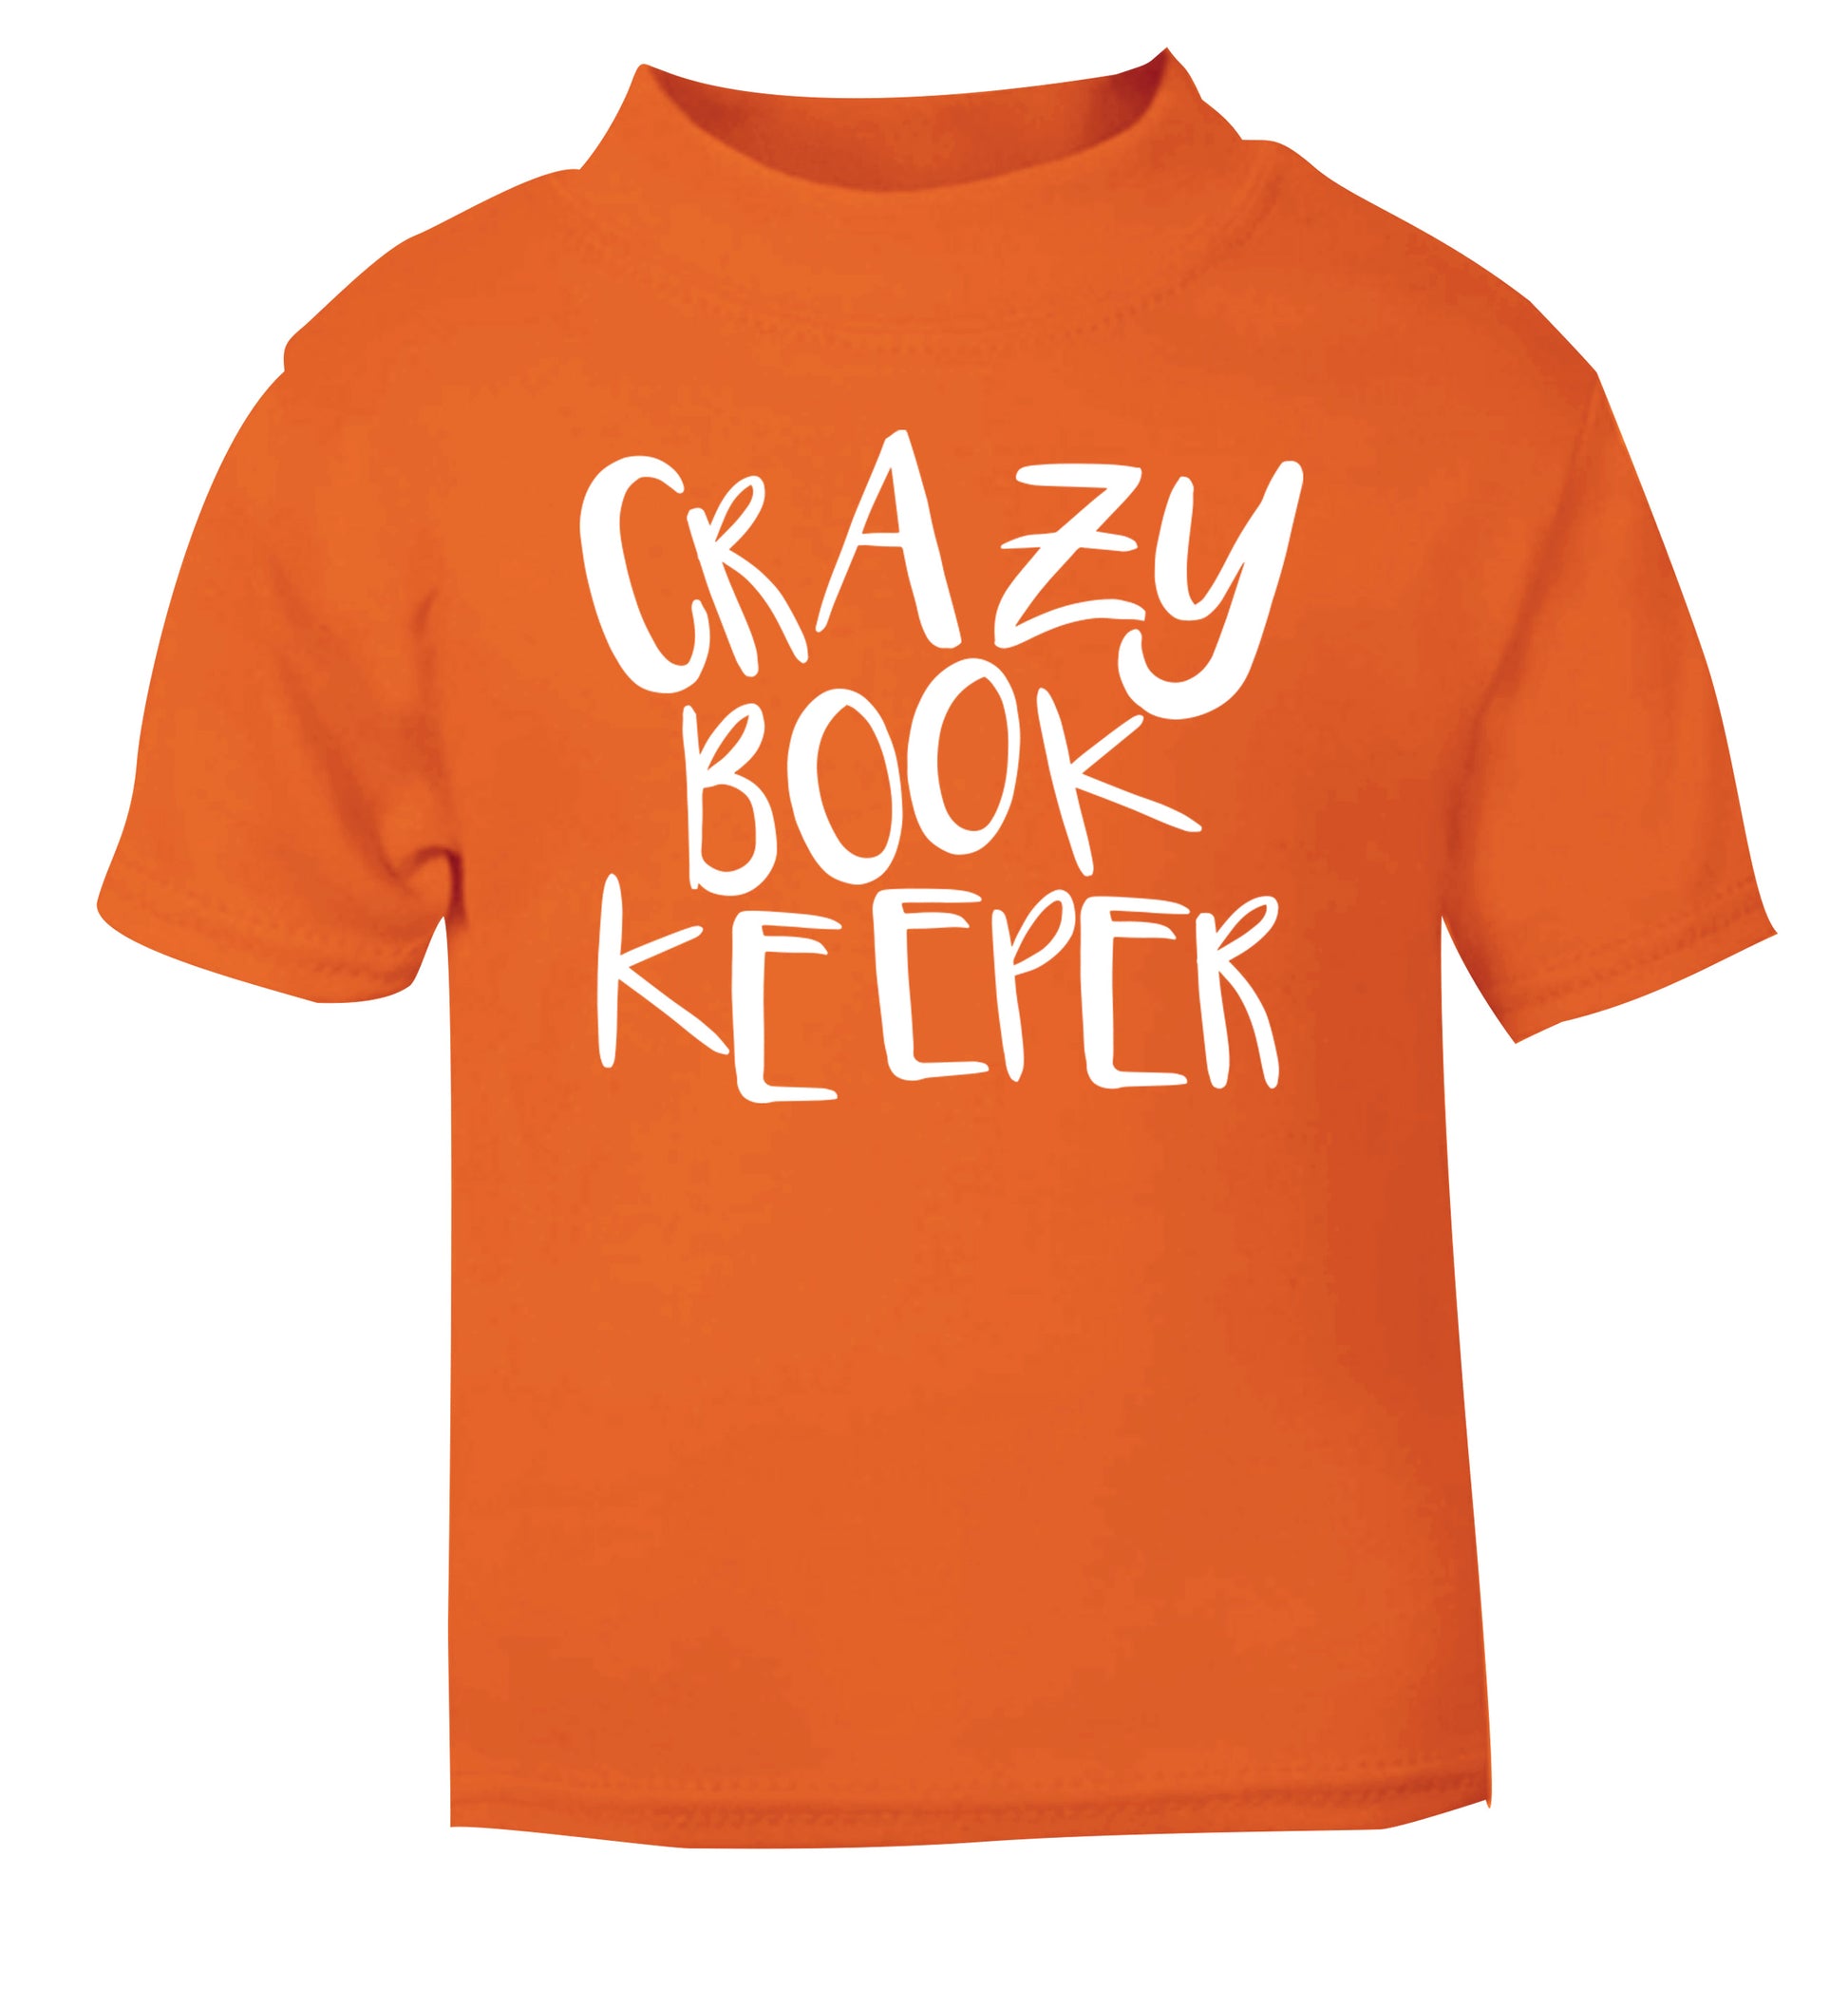 Crazy bookkeeper orange Baby Toddler Tshirt 2 Years